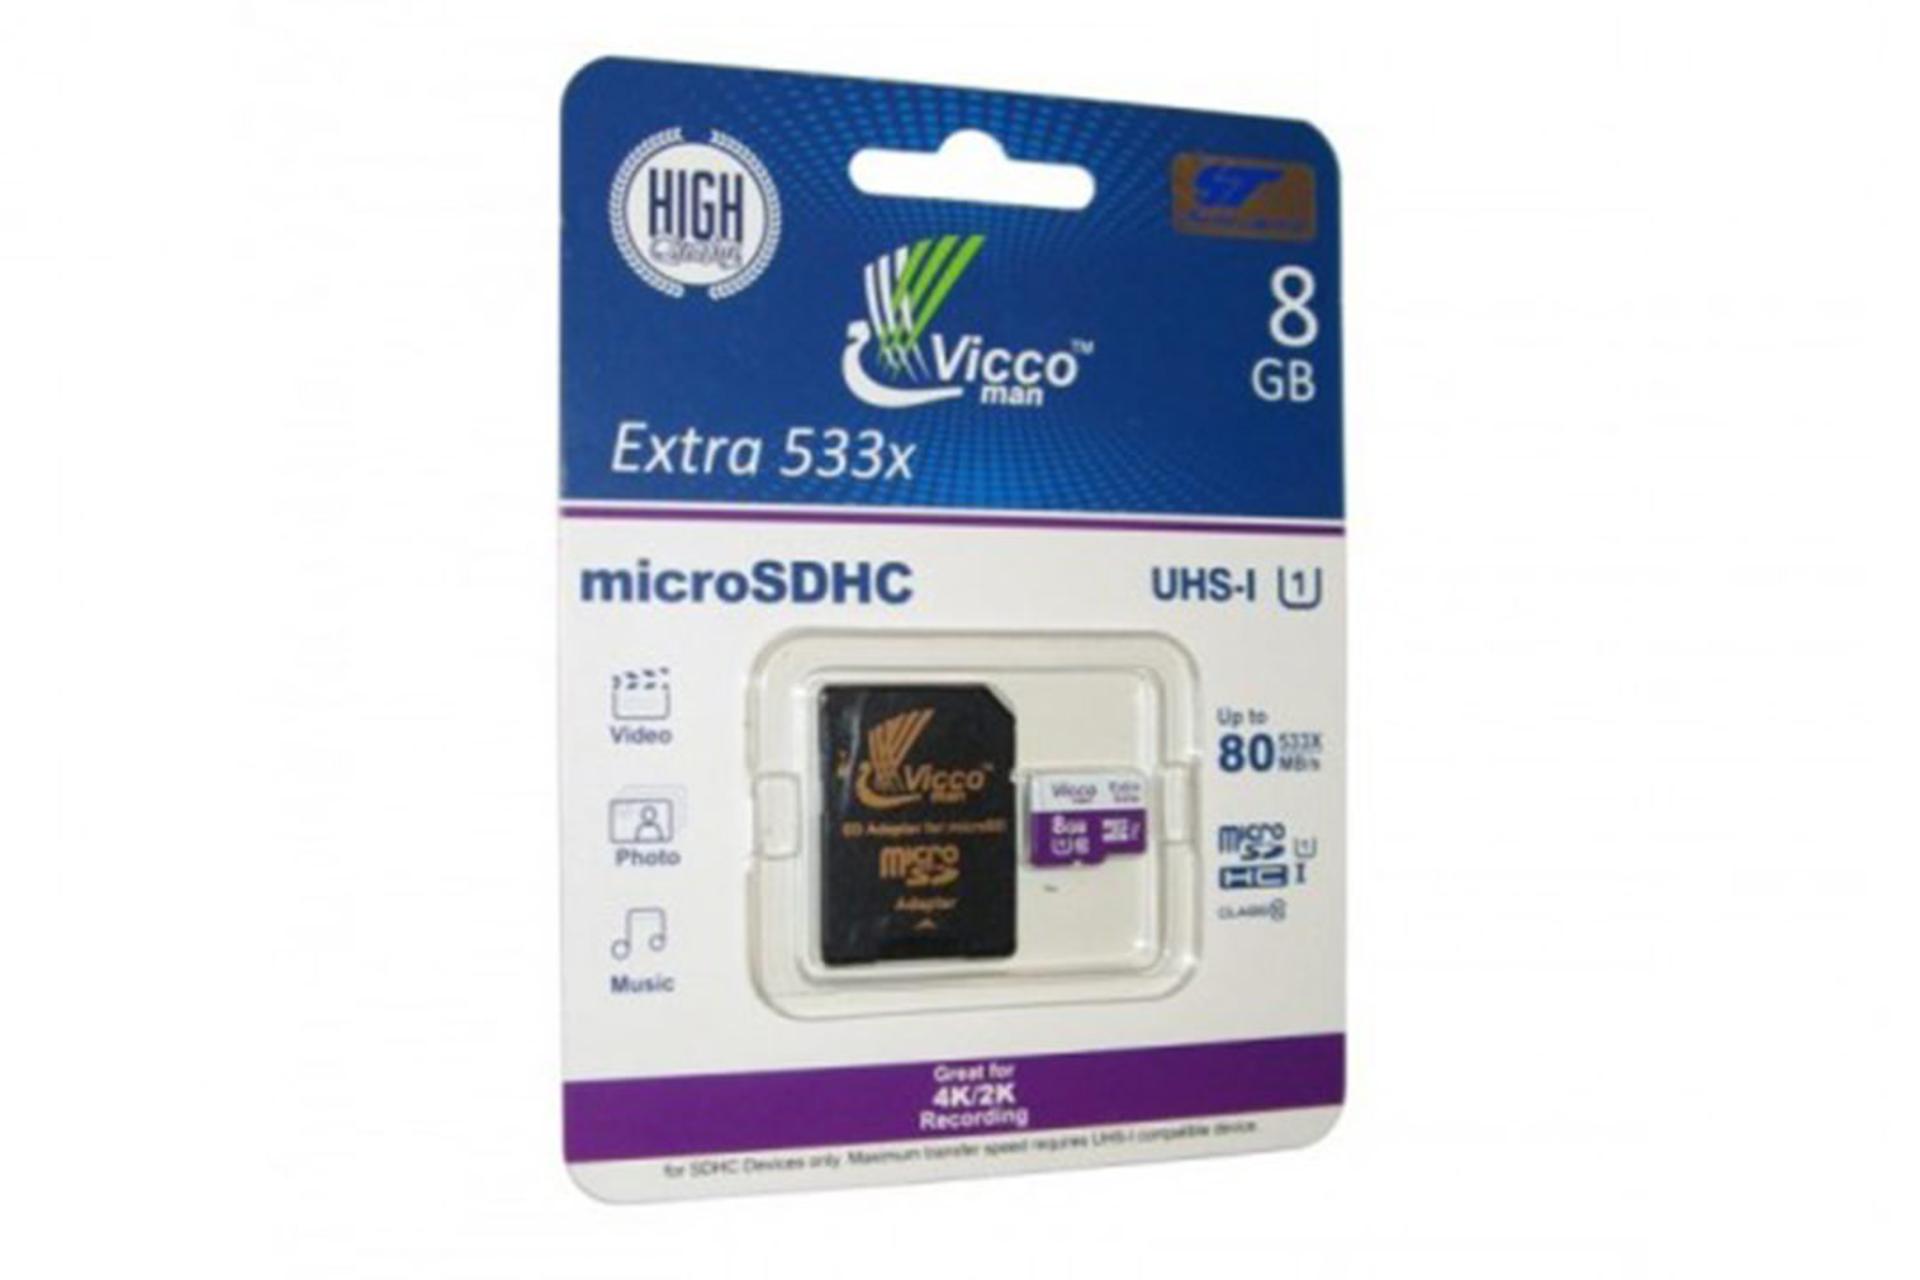 Viccoman Extra 533X microSDHC Class 10 UHS-I U1 8GB